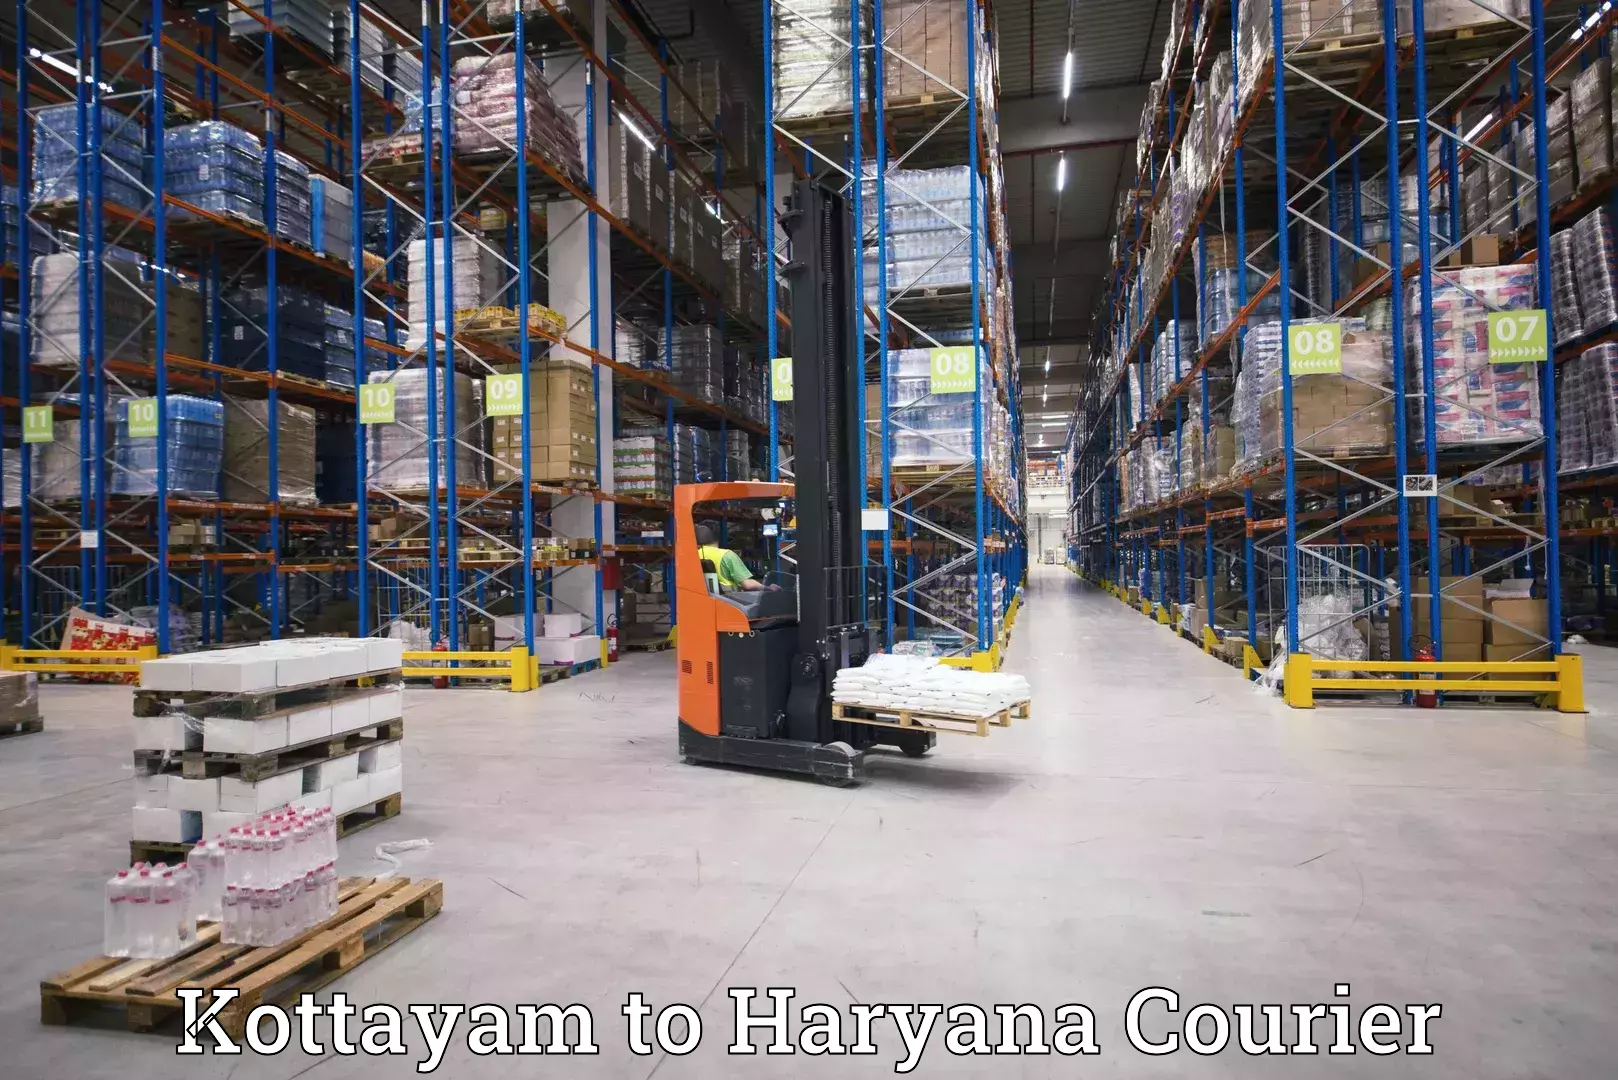 Logistics service provider Kottayam to Haryana